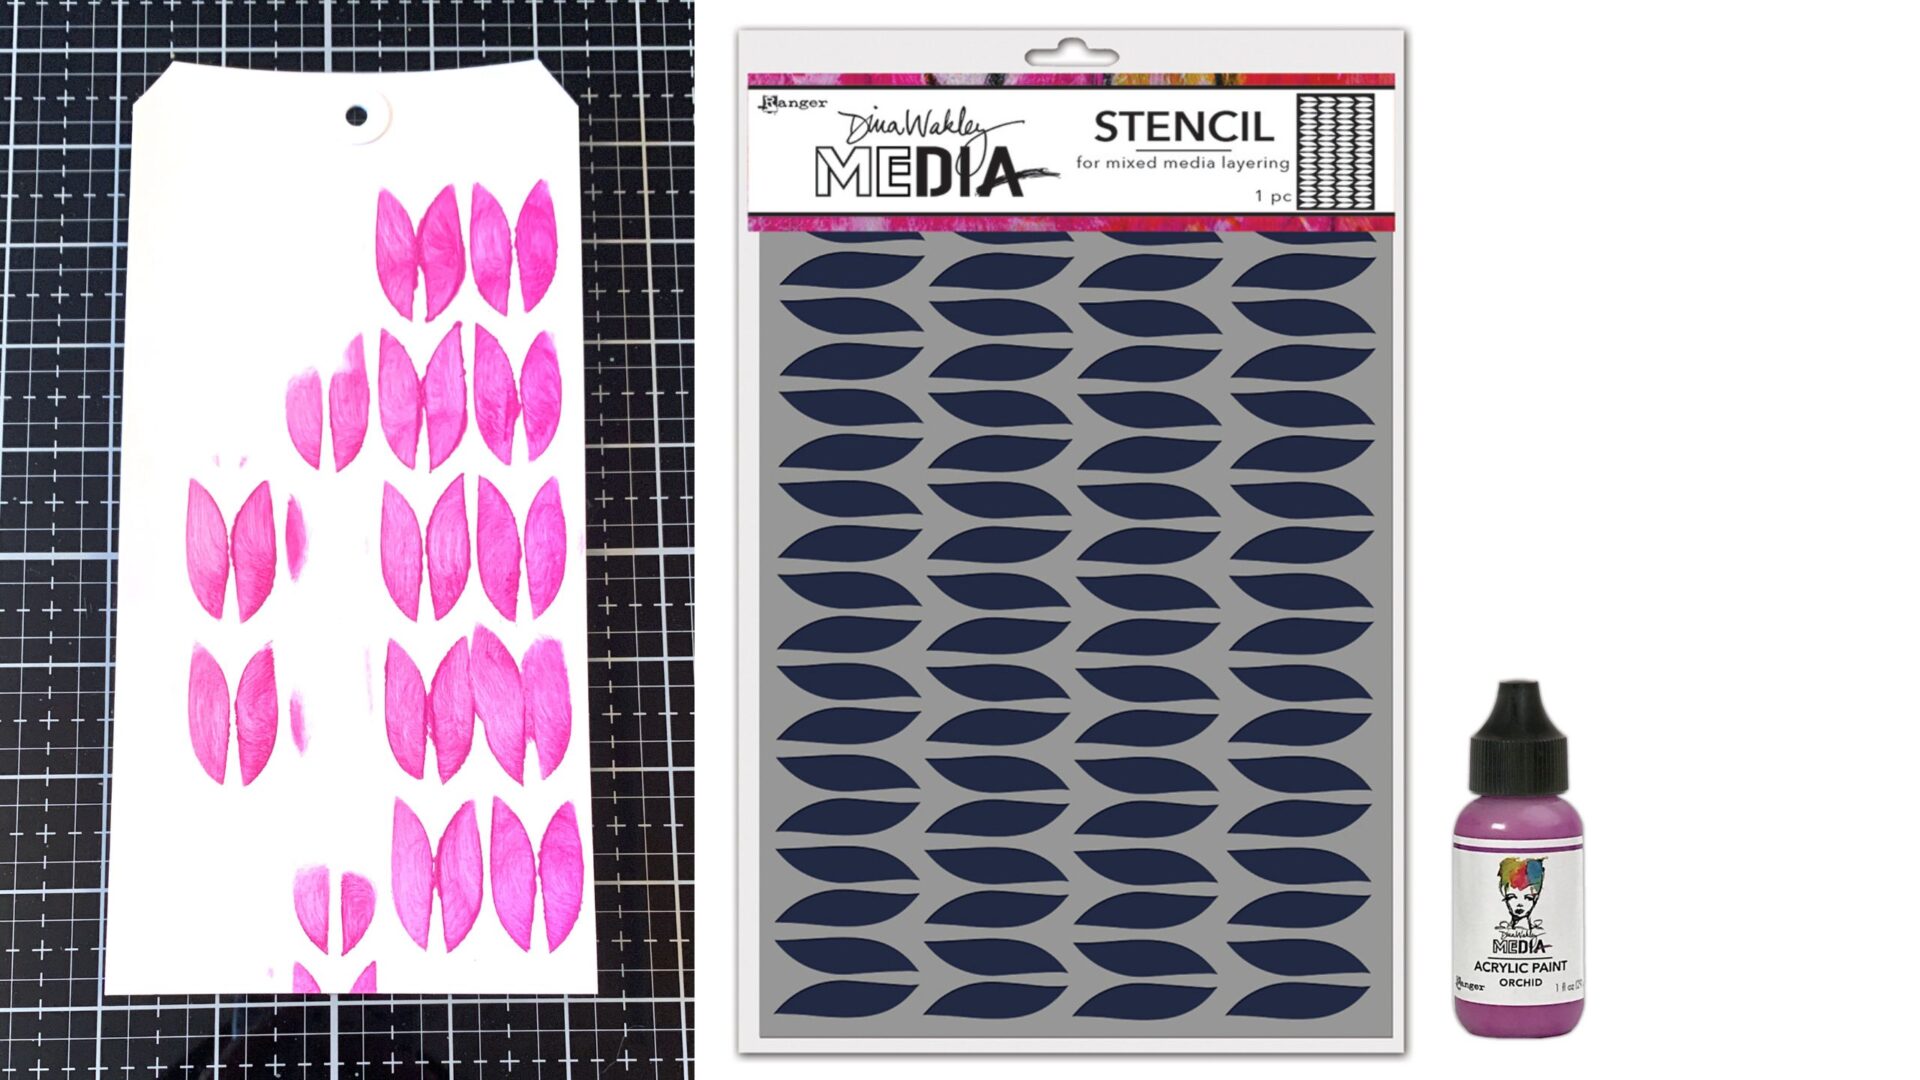 1-Dina Wakley Media Sideways Stencil Orchid Acrylic Paint - Creative Scrapbooker Magazine